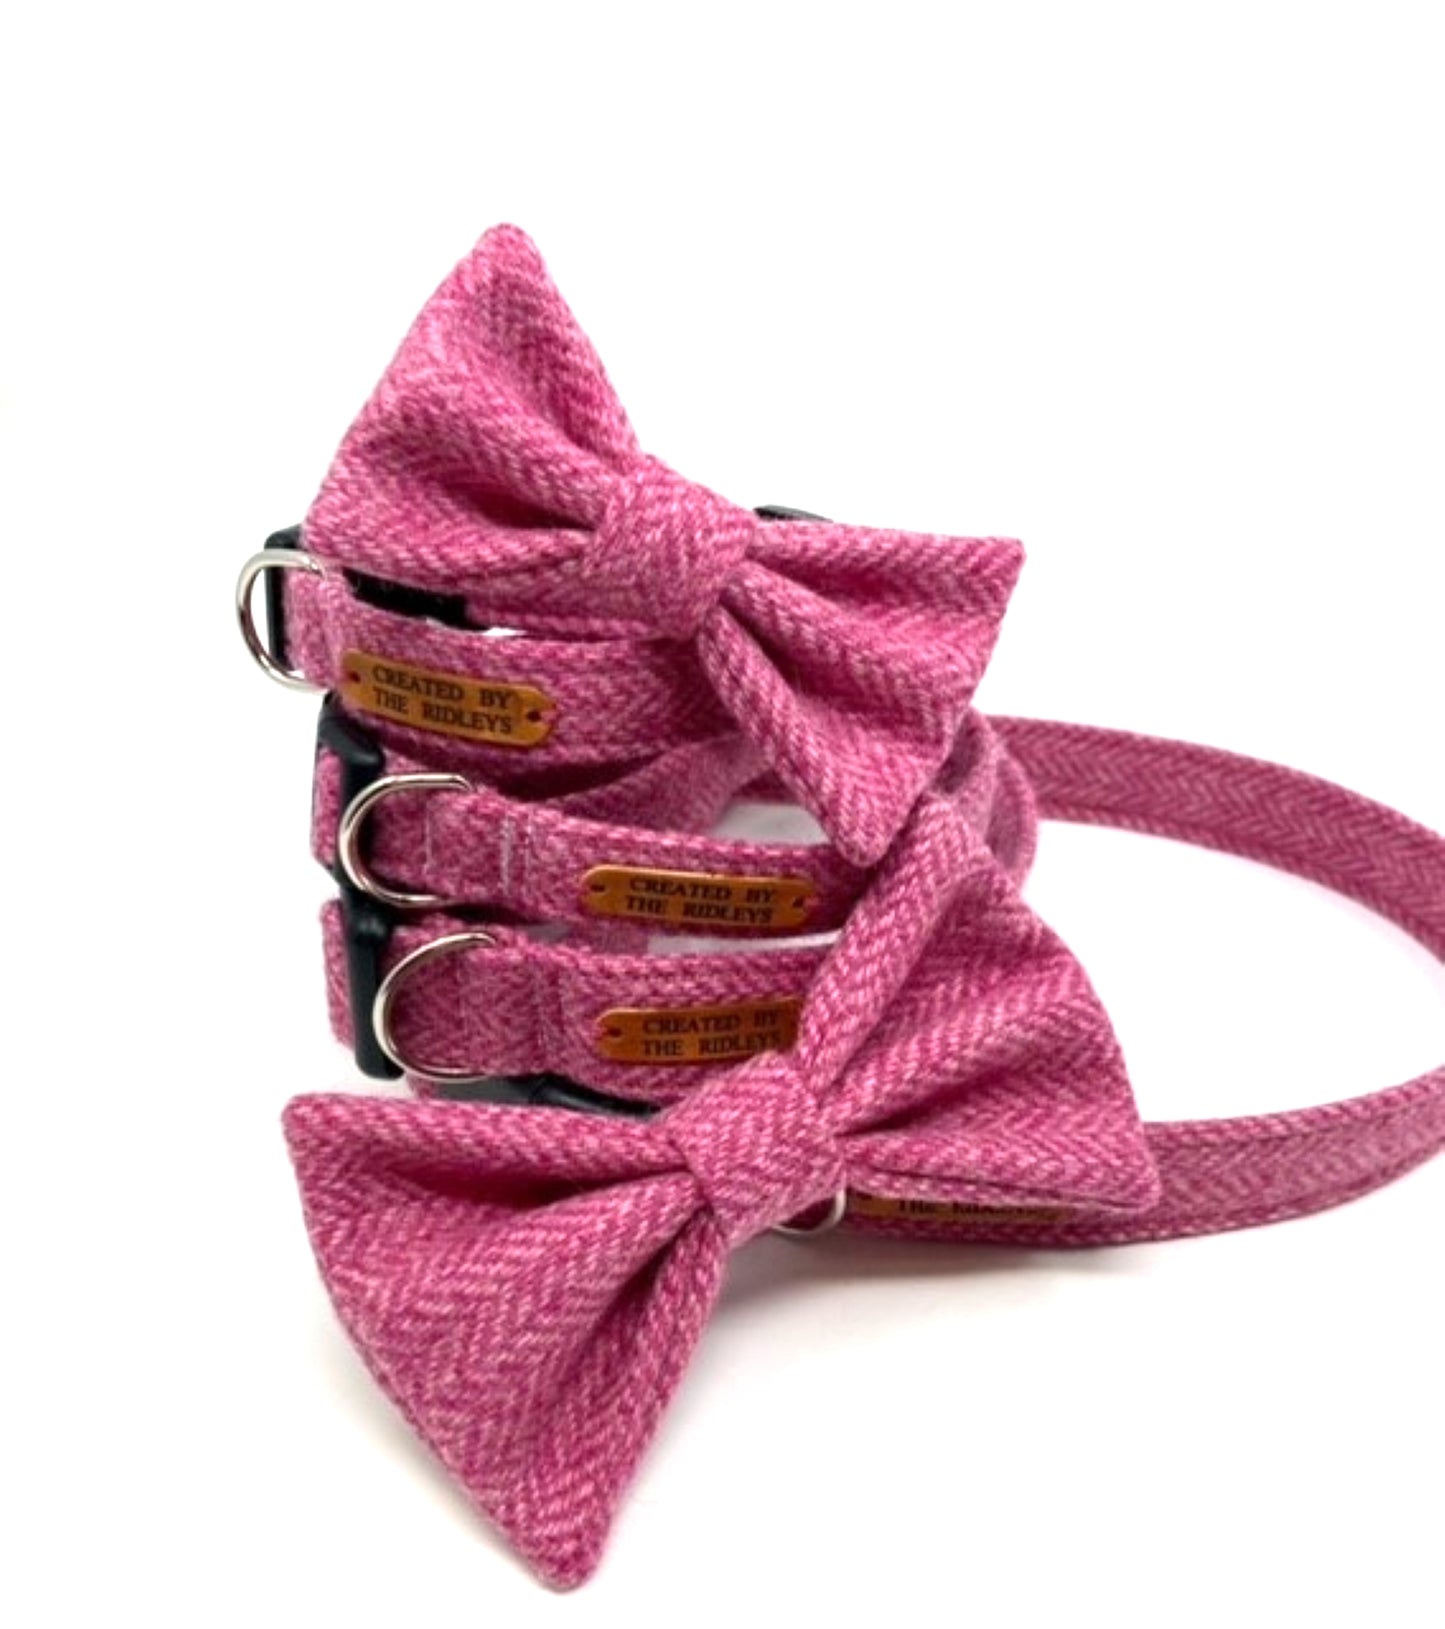 Tweed Dog Collar - Pink Herringbone